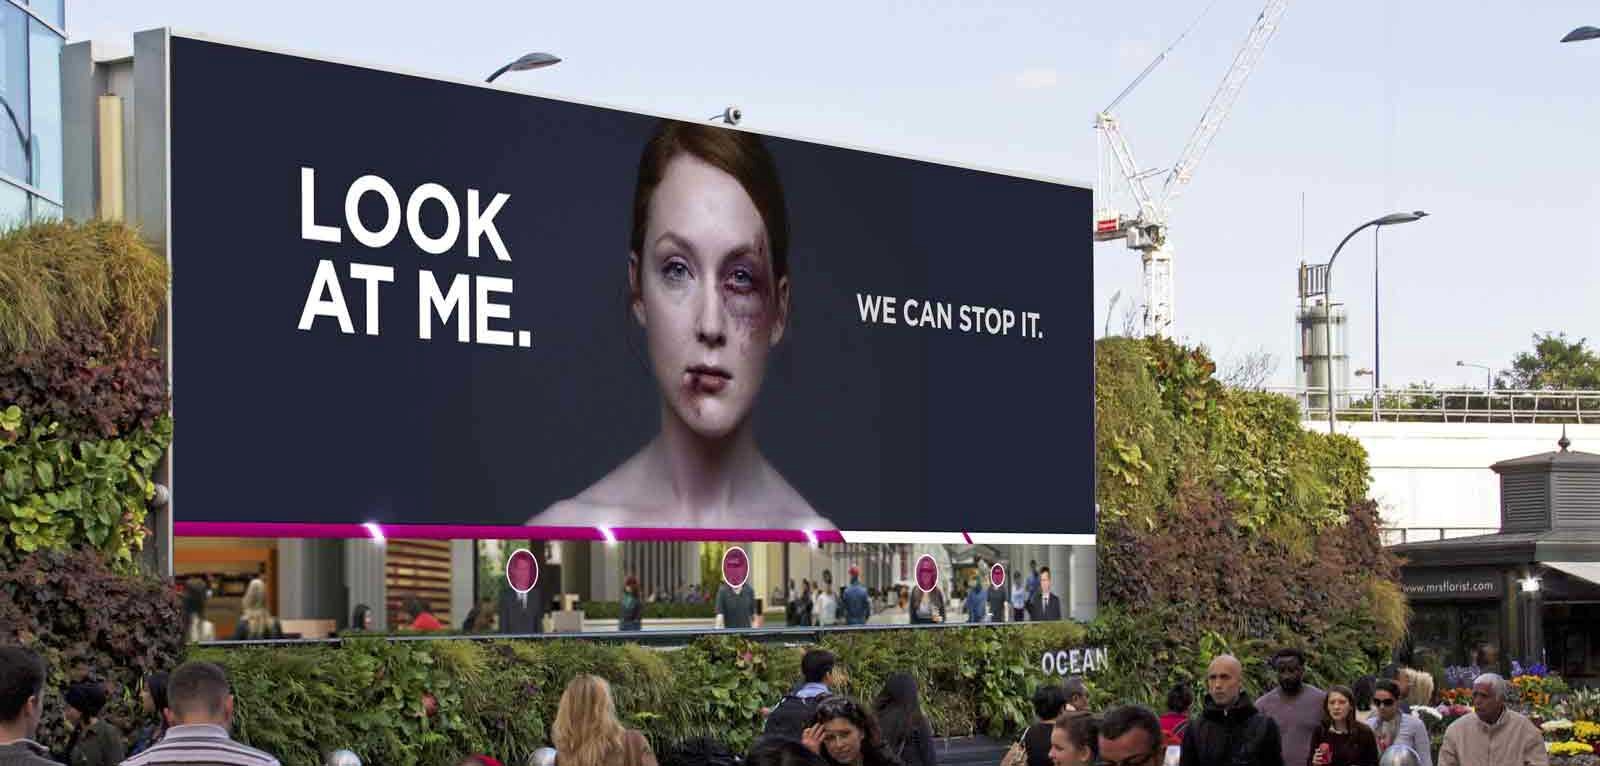 Women's Aid advert - Look at me beaten woman